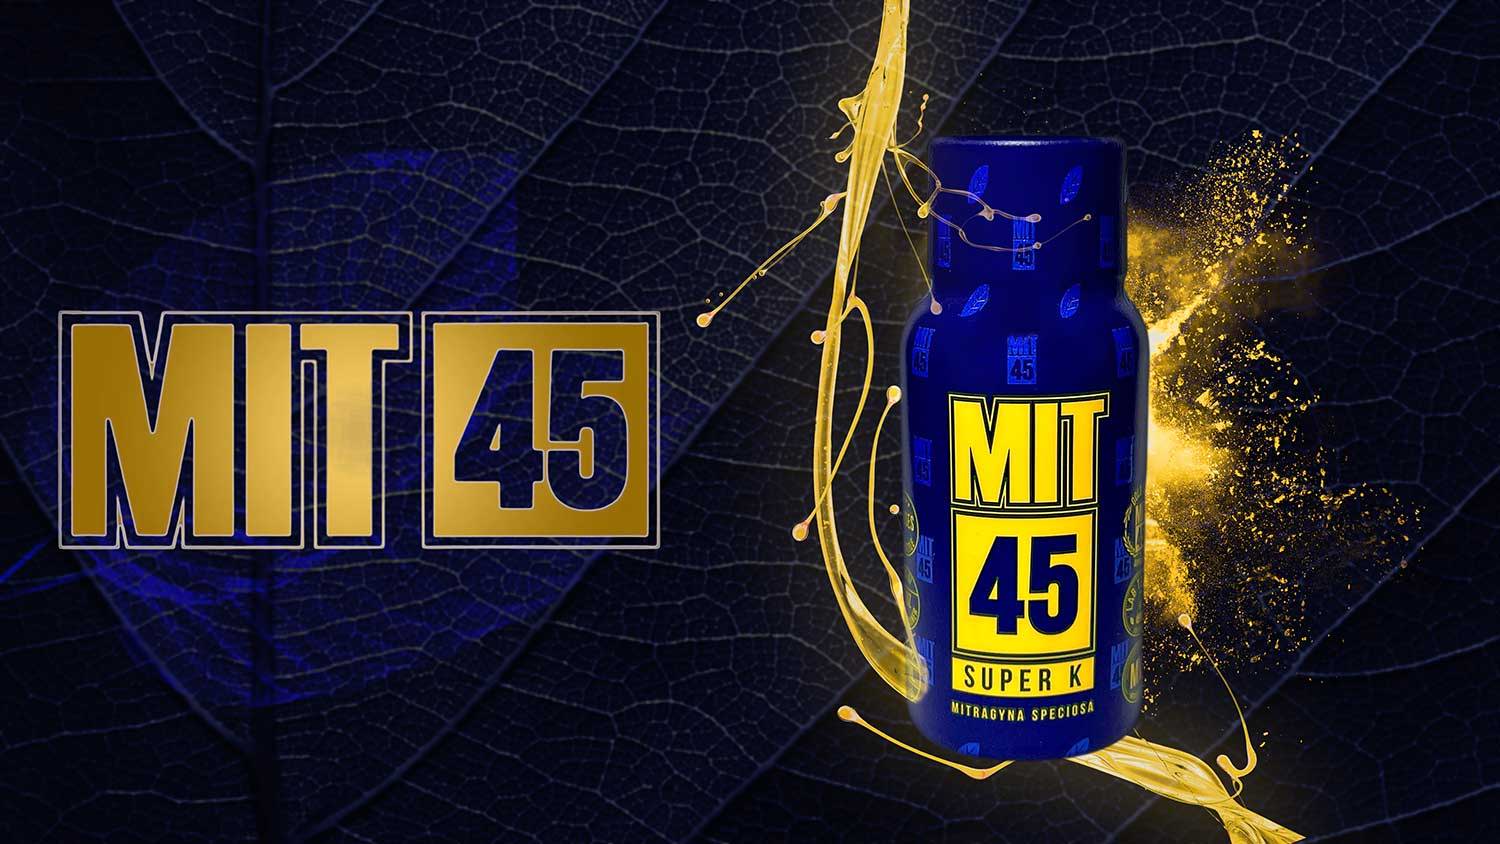 MIT 45 Super K Special Edition Blue